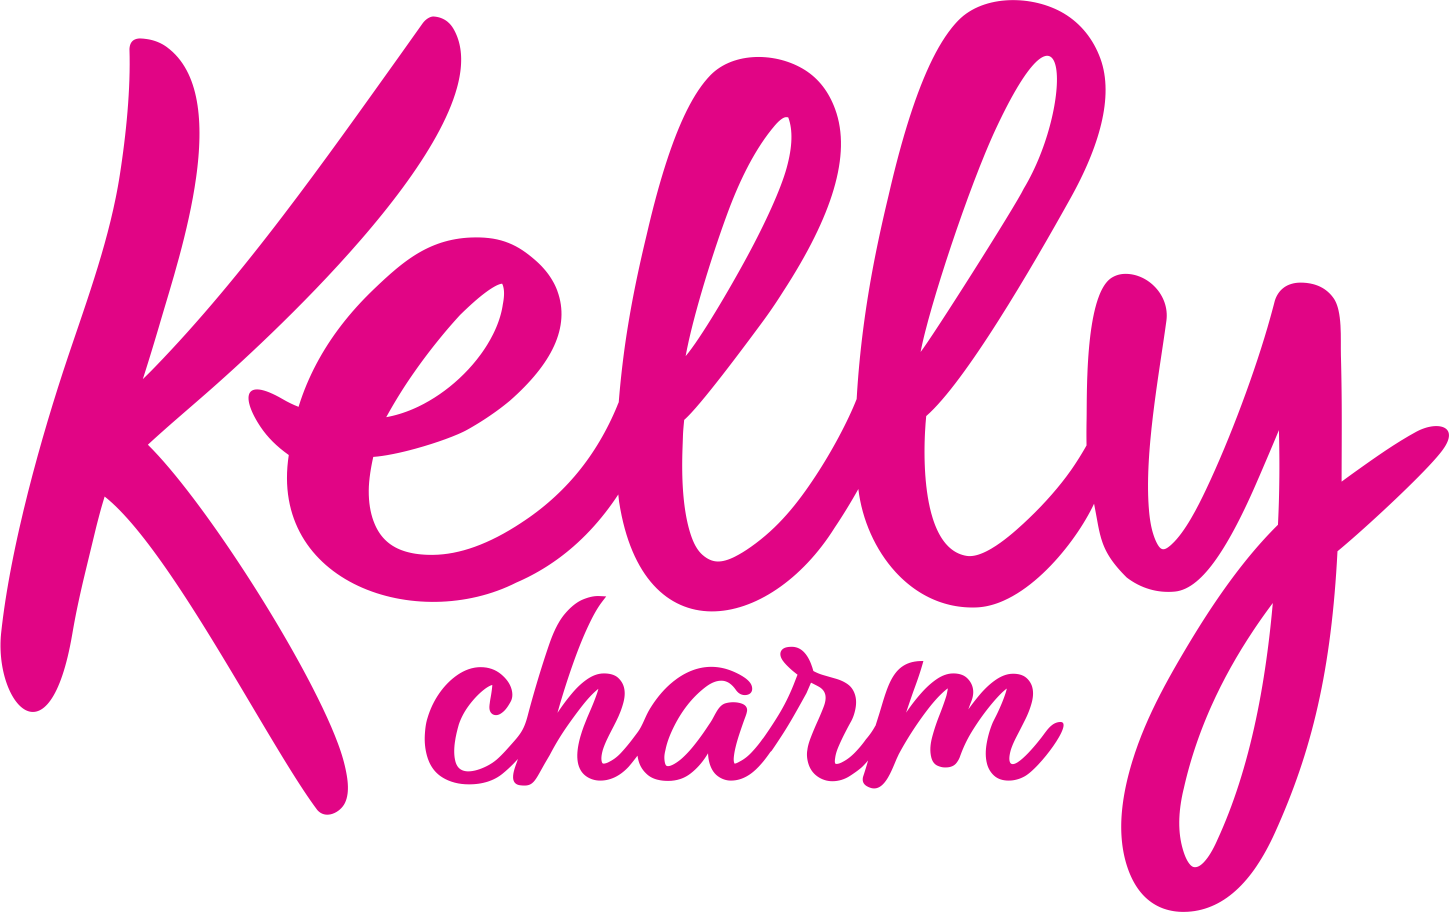 Kelly charm